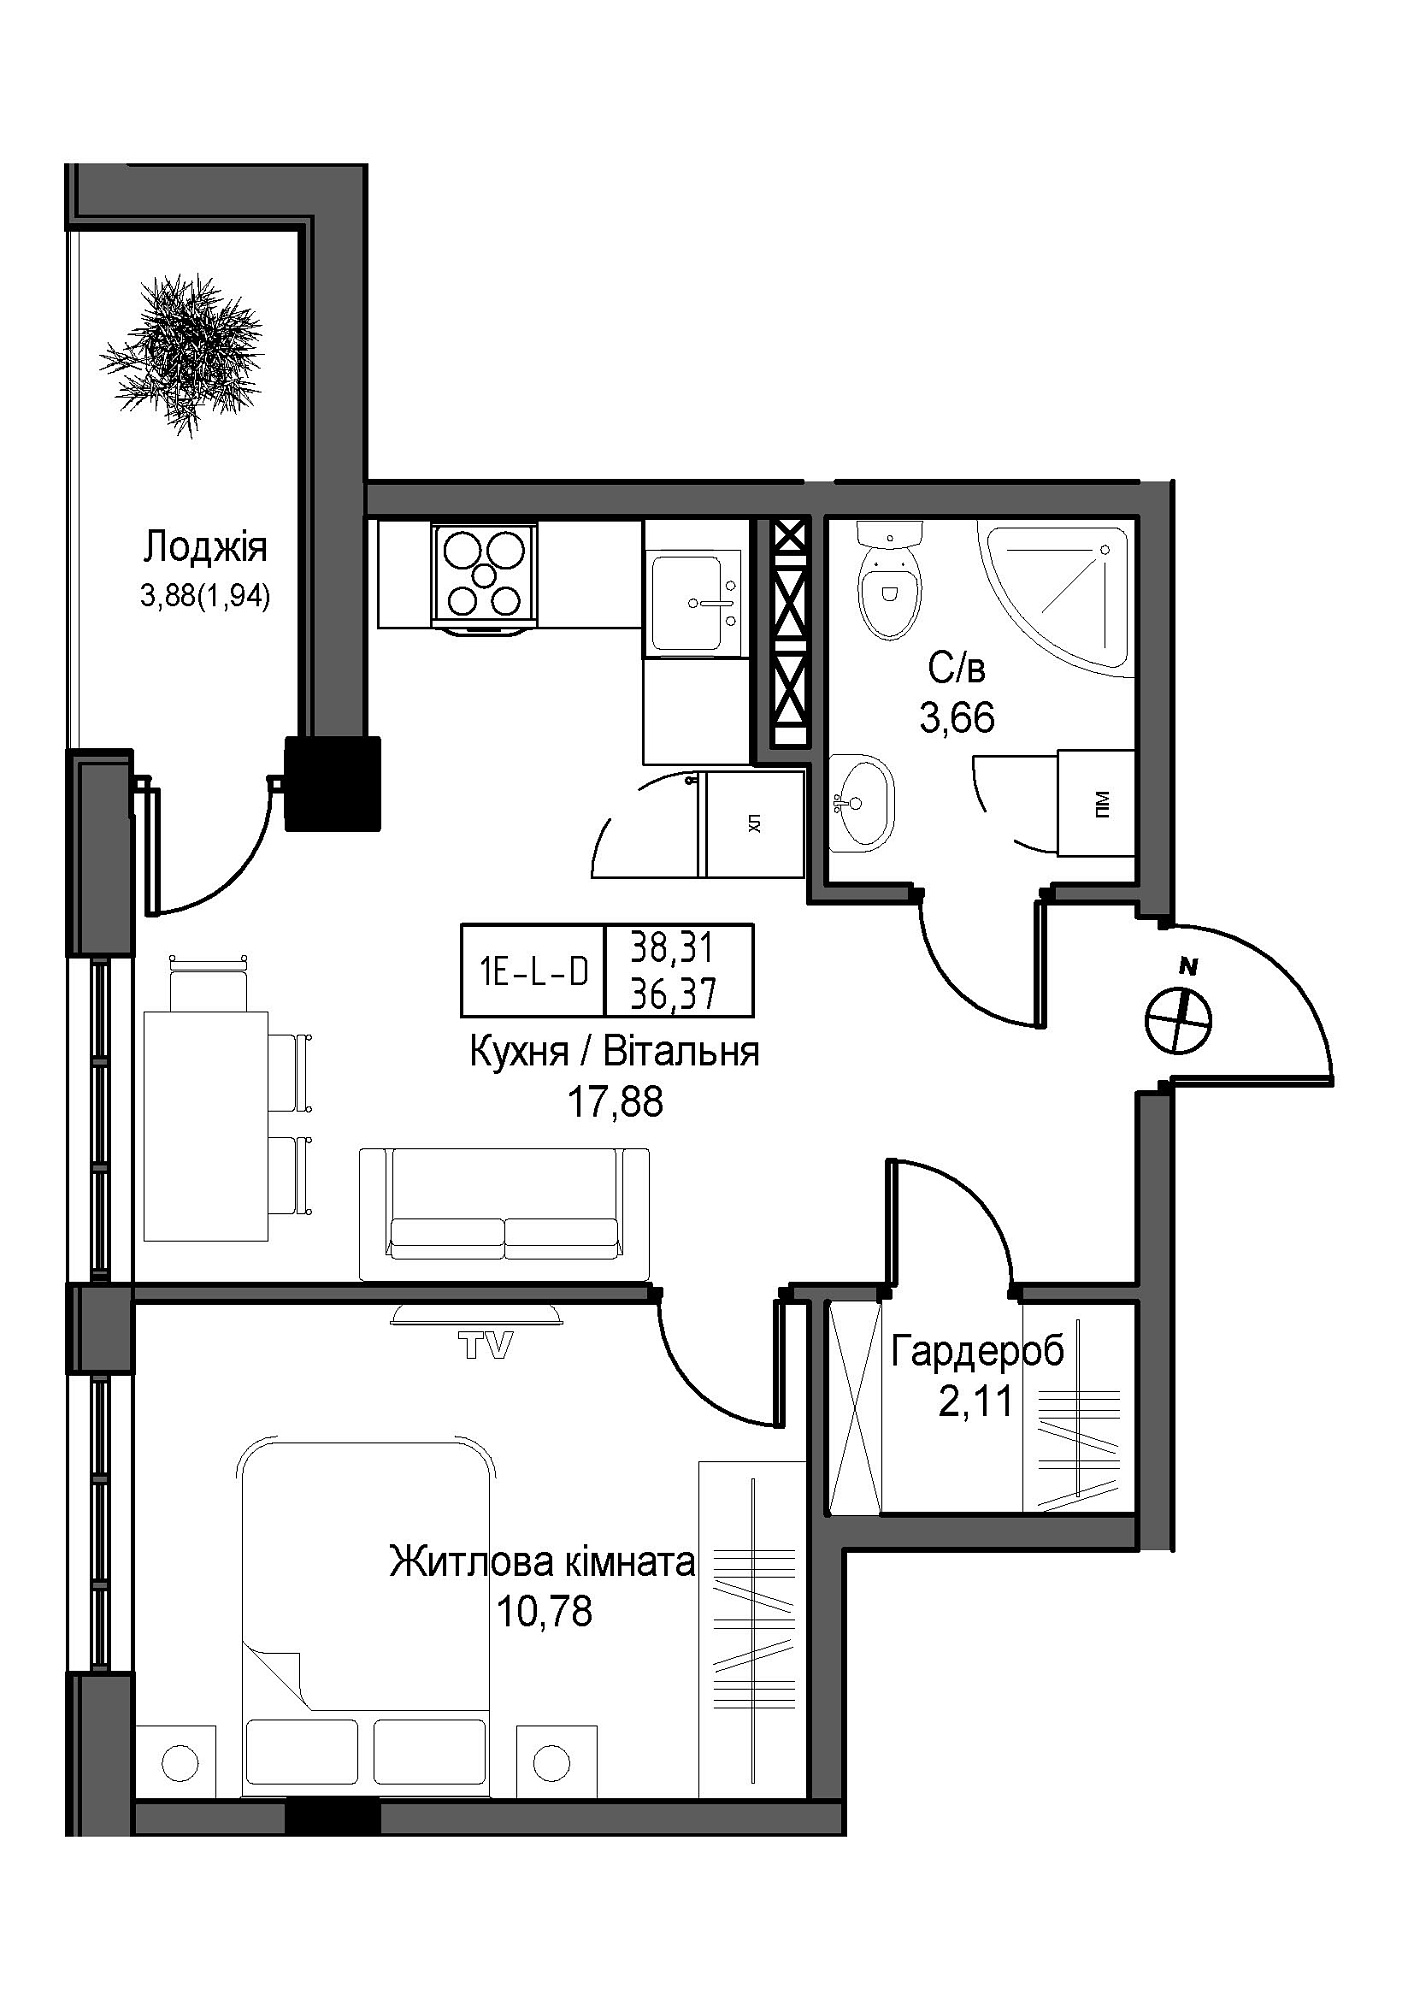 Планування 1-к квартира площею 36.37м2, UM-007-05/0011.